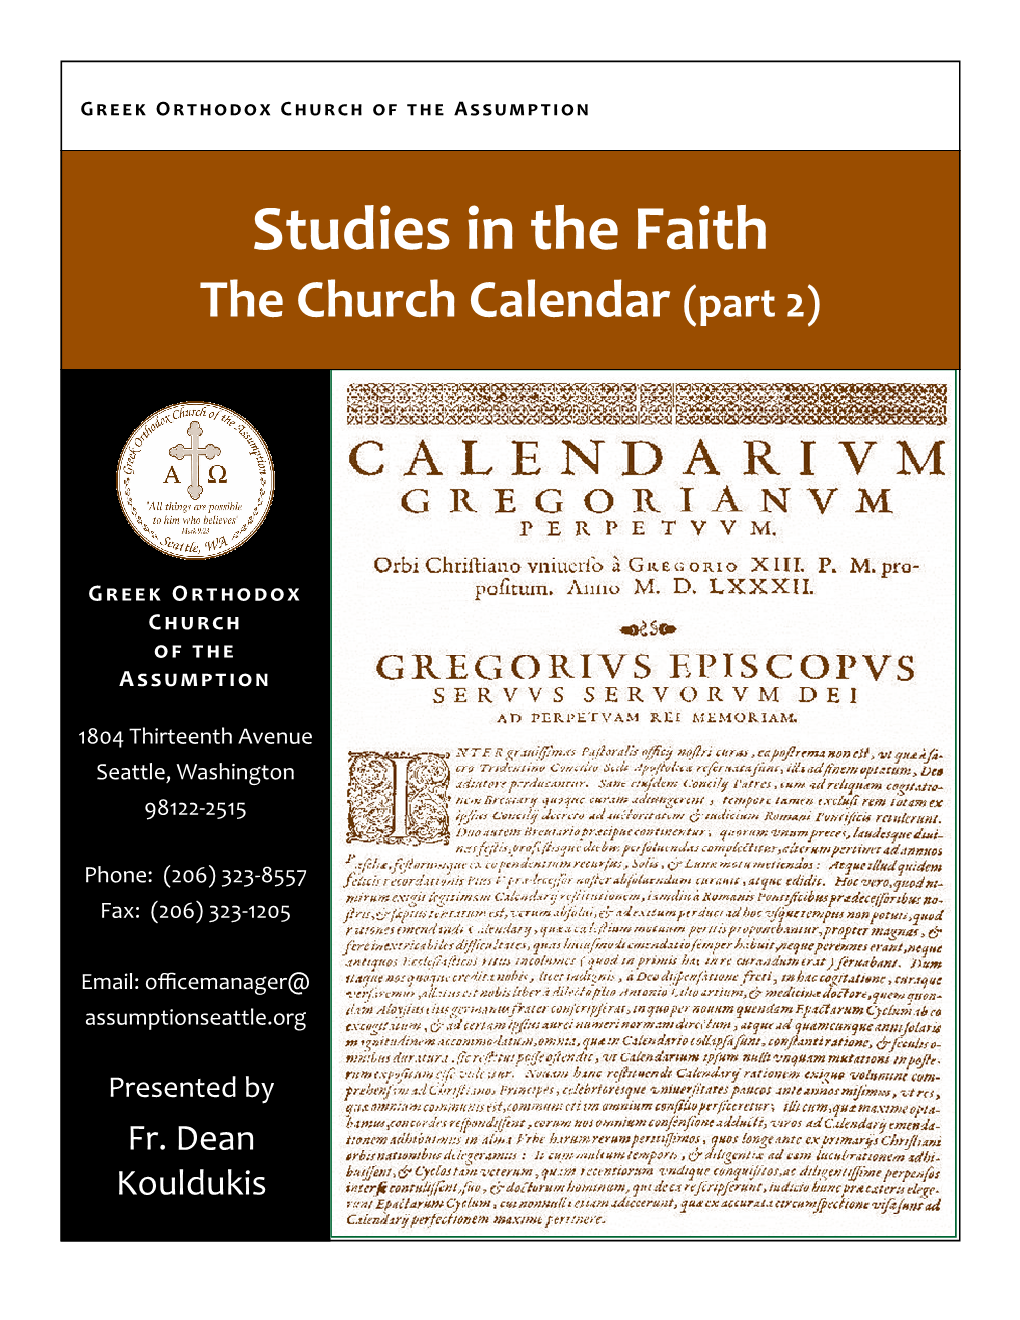 Studies in the Faith the Church Calendar (Part 2)